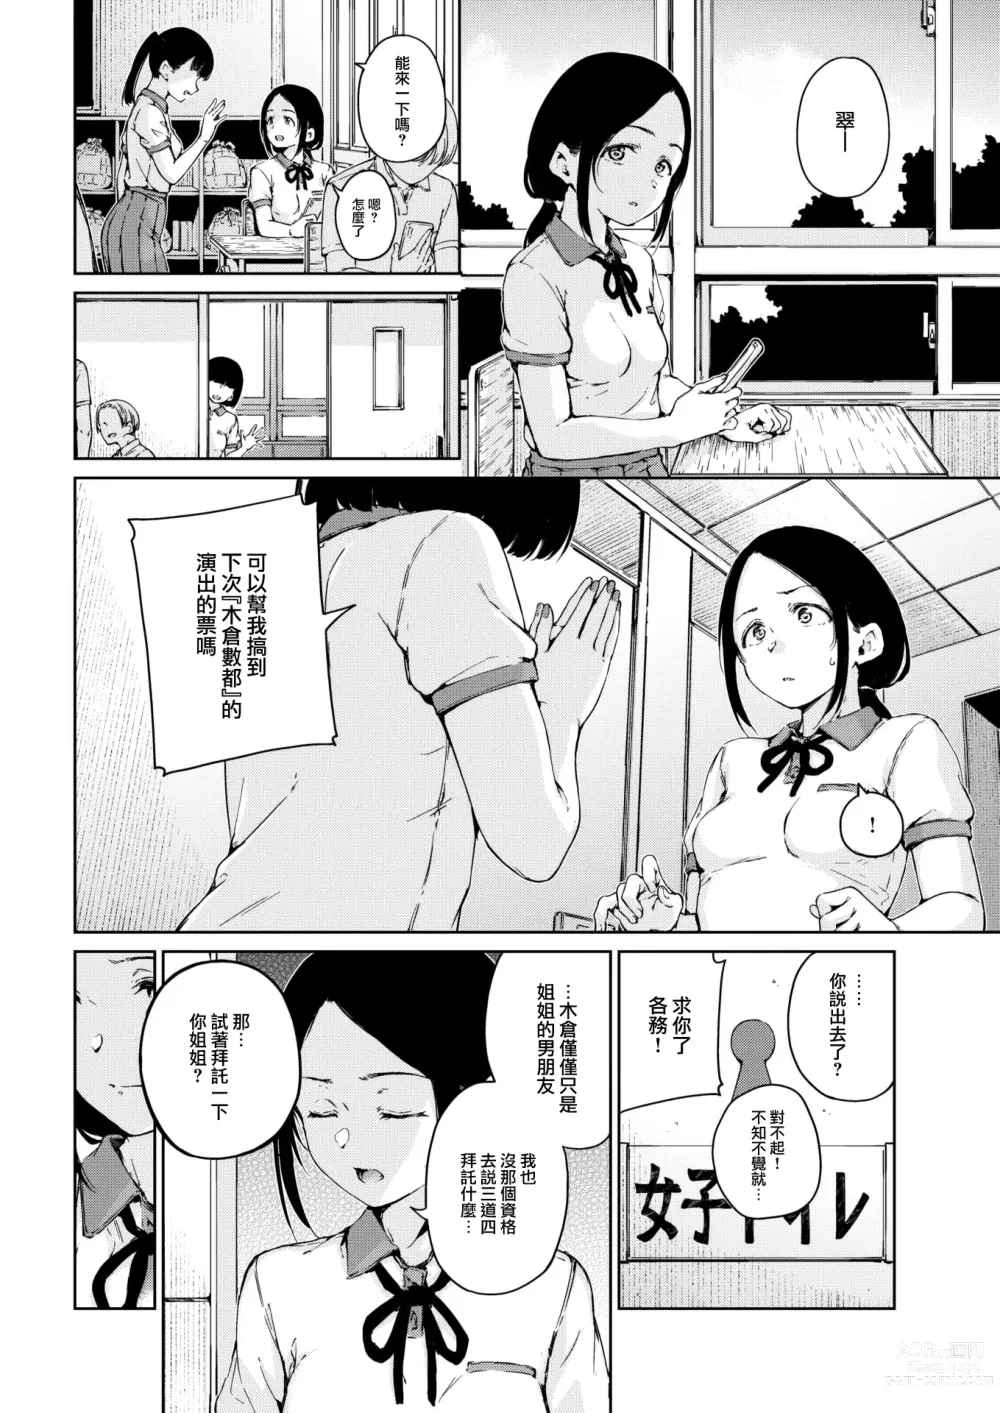 Page 3 of manga Vanilla Ice